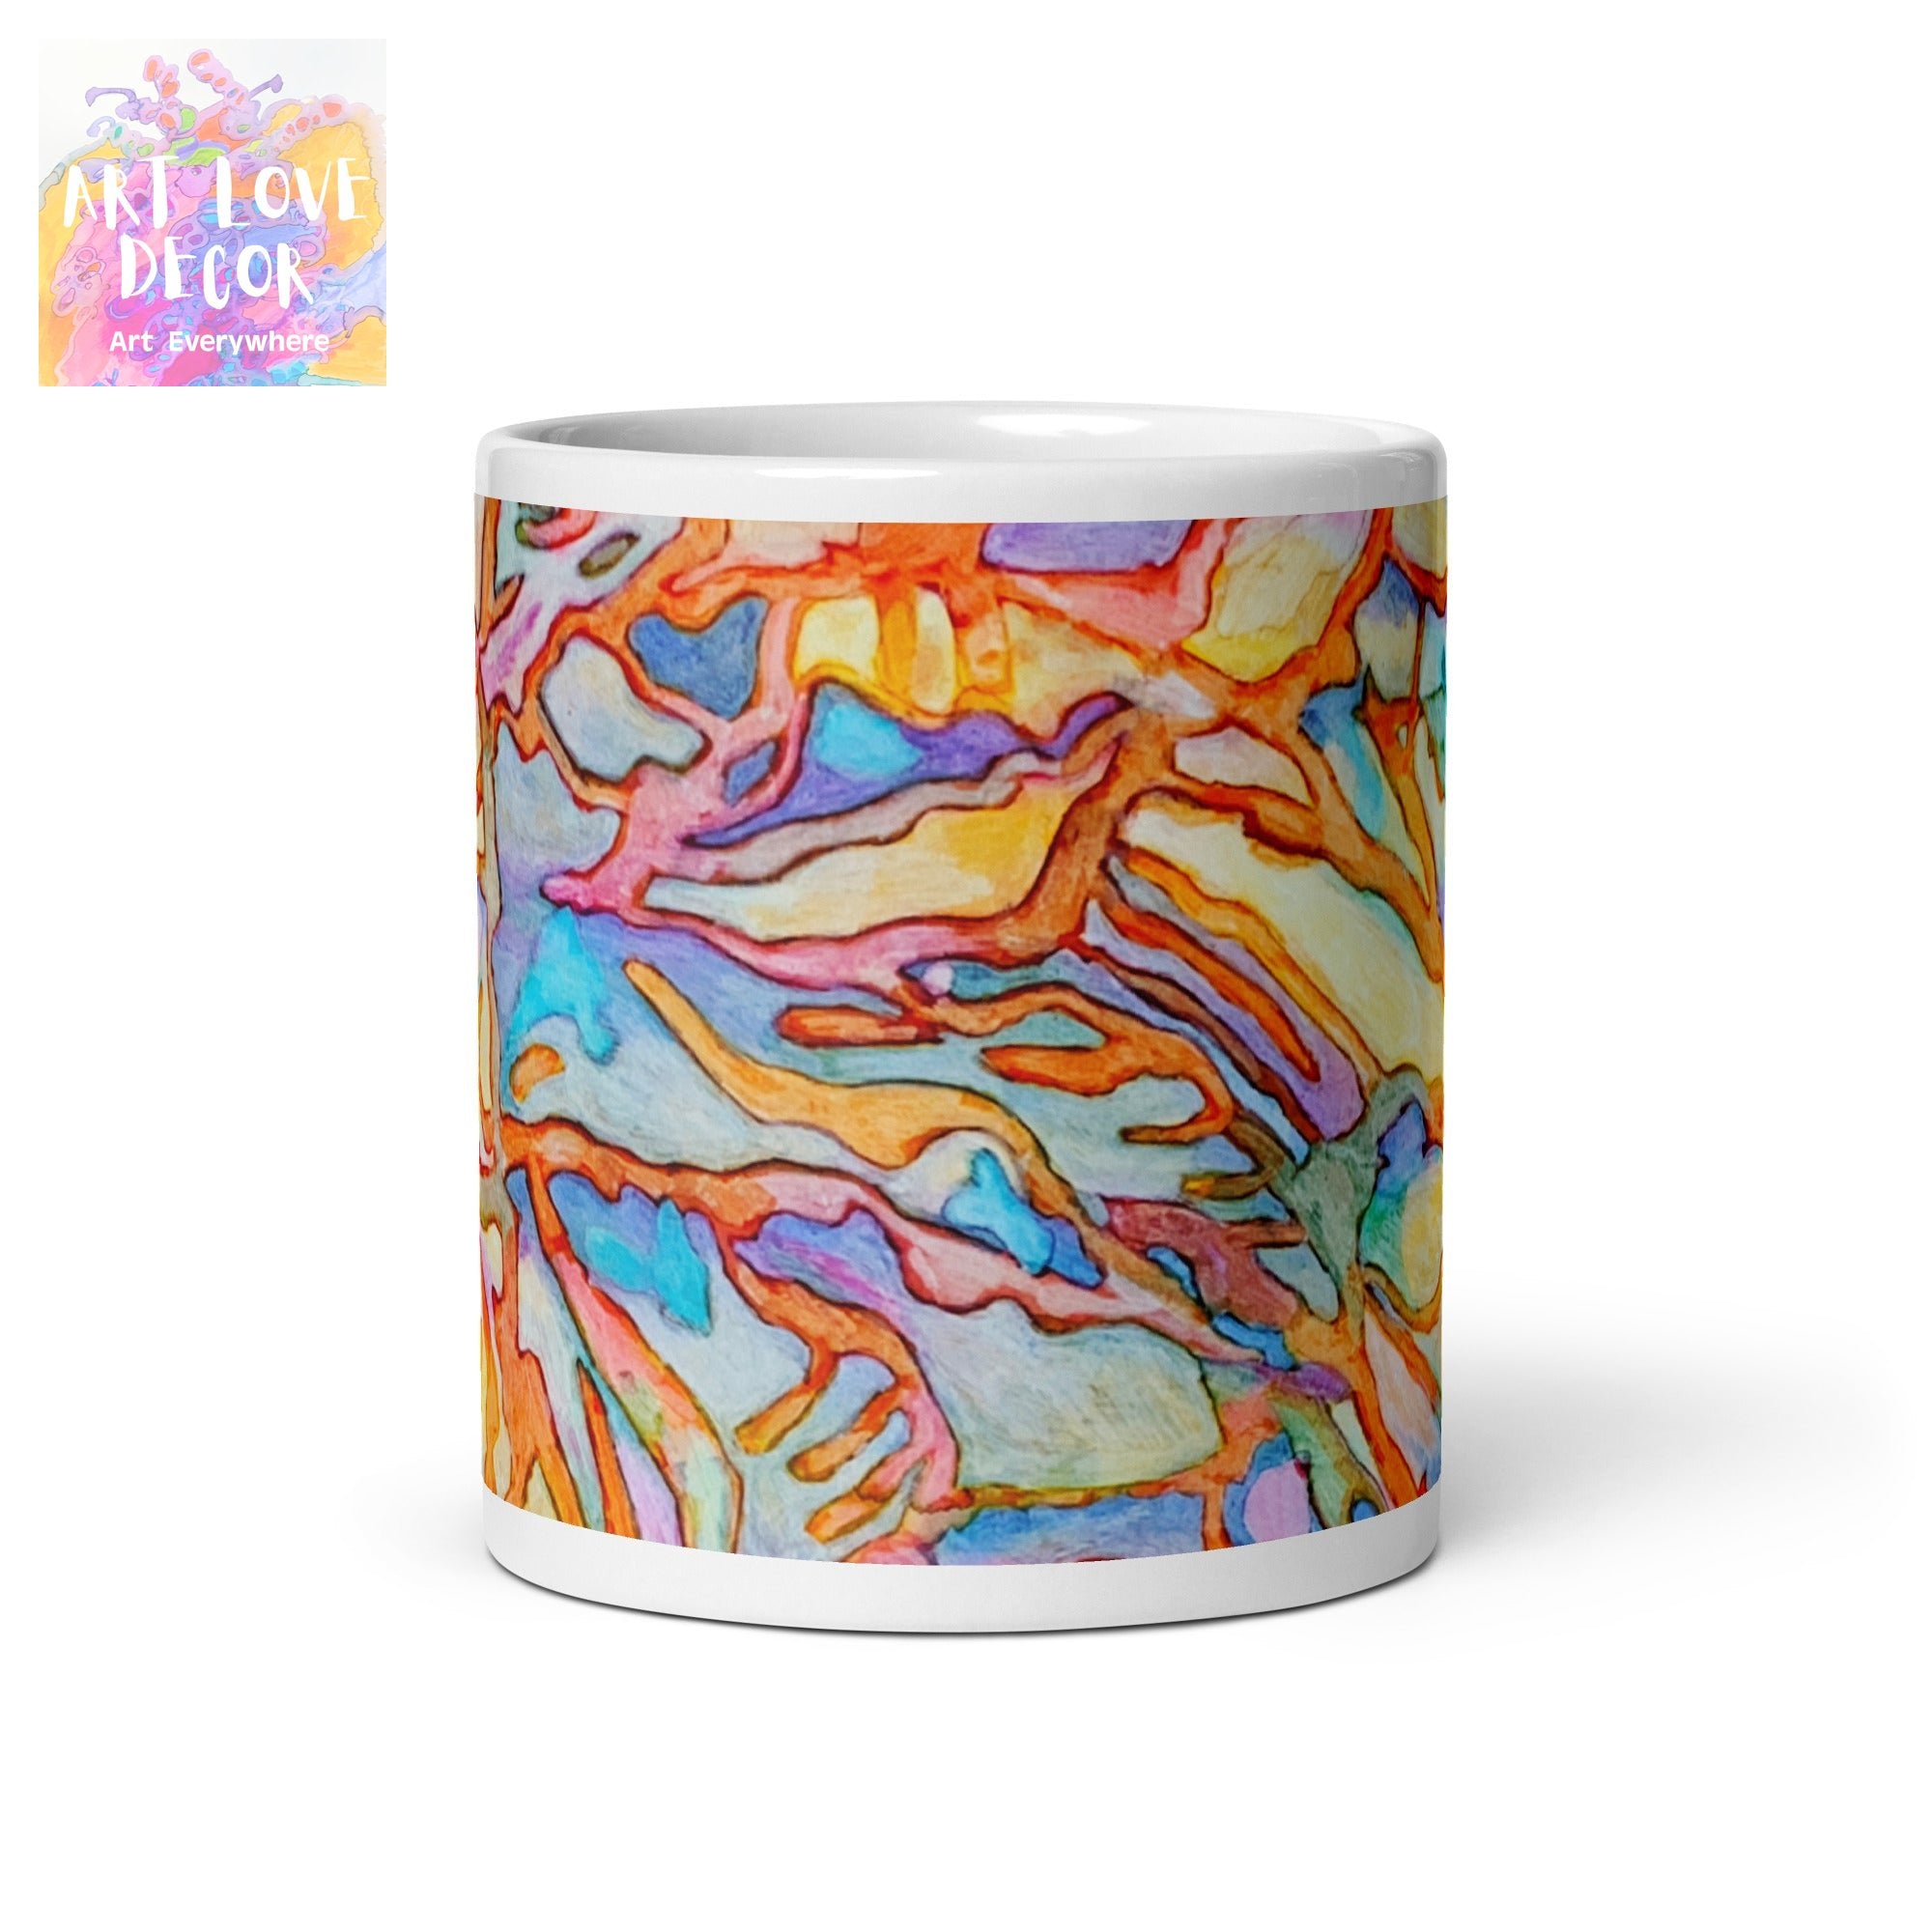 Coral Reef Abstract White glossy mug - Art Love Decor